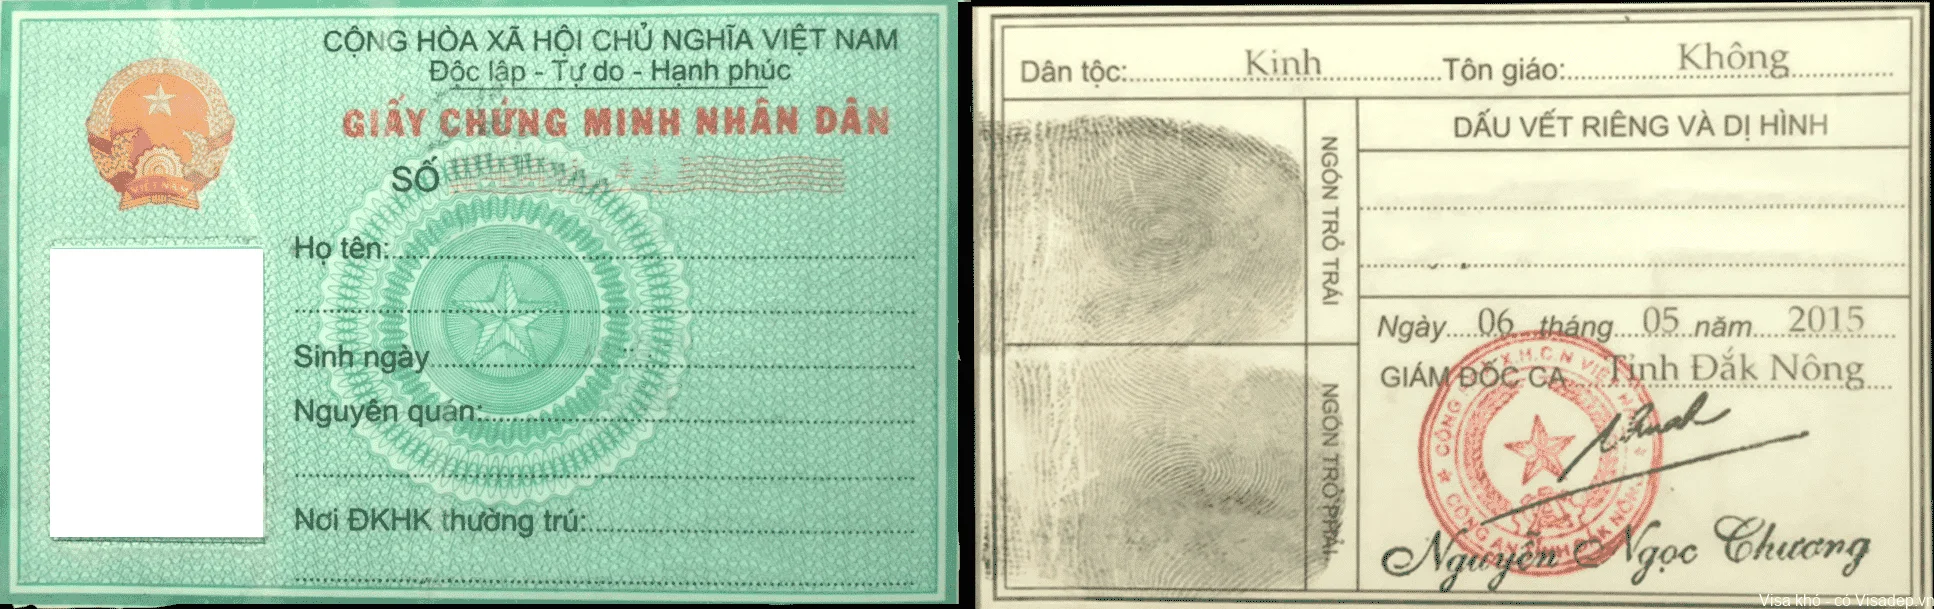 Chung Minh Nhan Dan 9 So Duoc Su Dung Den Khi Nao